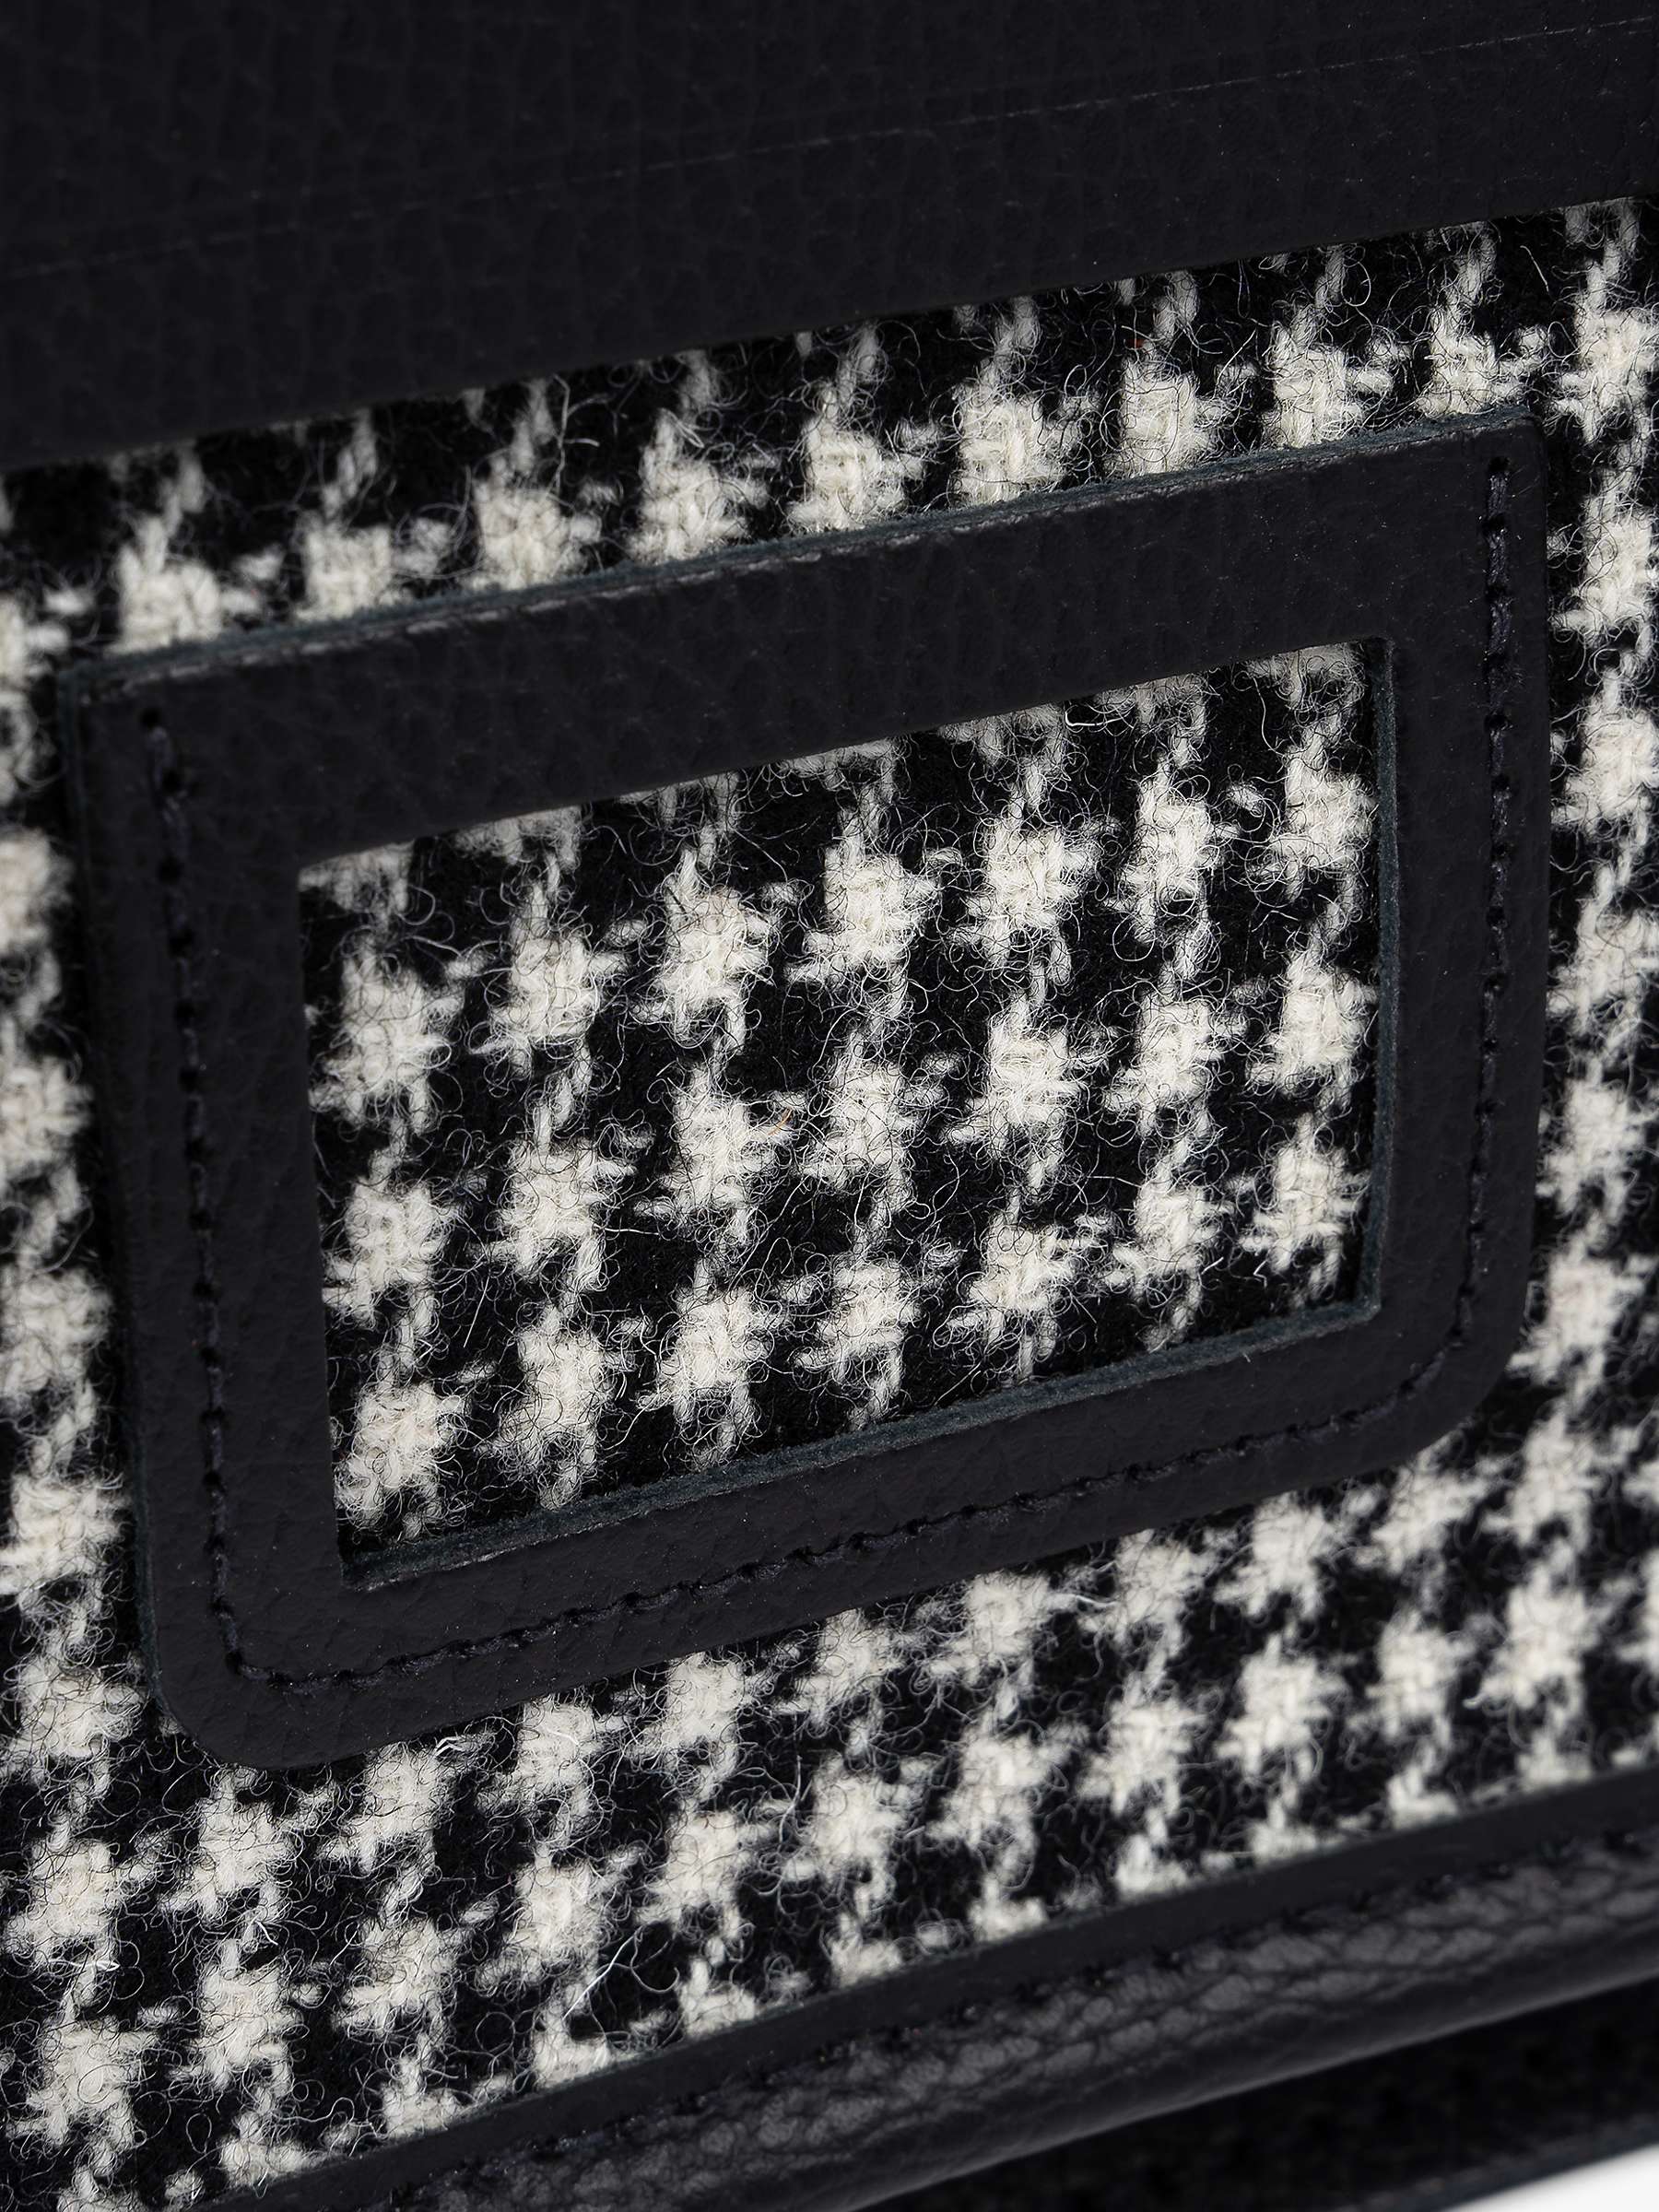 Buy Cambridge Satchel Small Portrait Leather Backpack, Black Celtic Grain/Harris Tweed Tartan Online at johnlewis.com